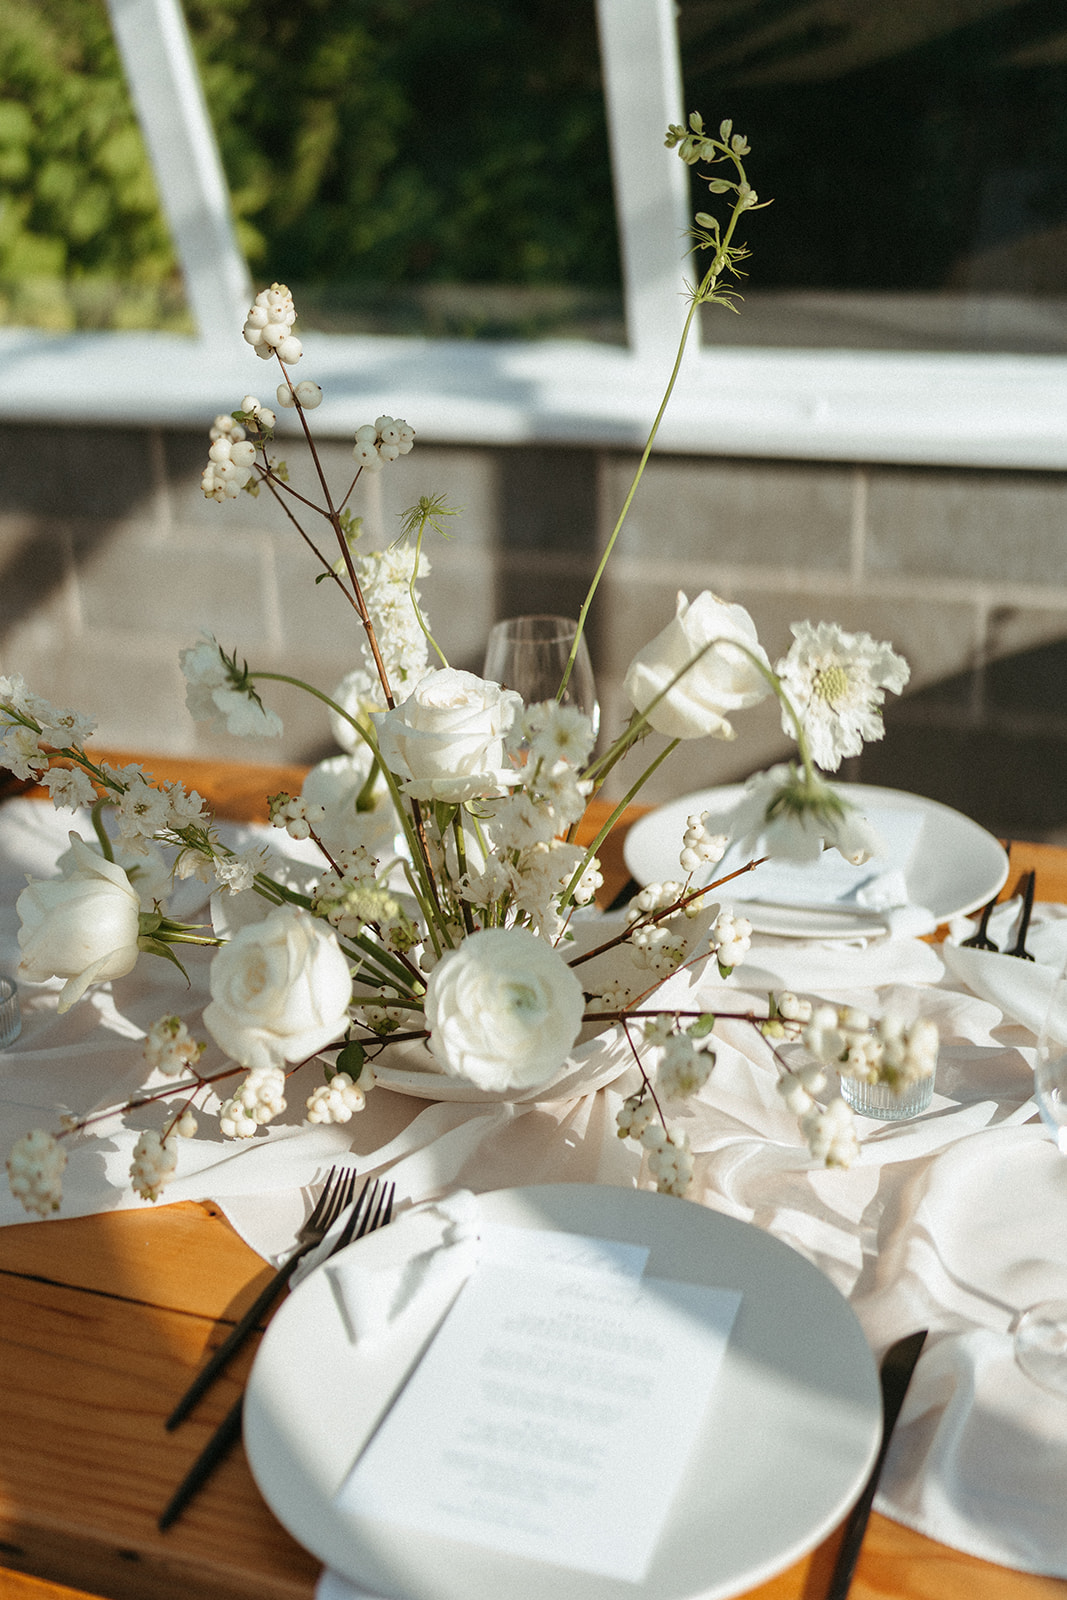 Greenhouse wedding, outdoor wedding, intimate wedding inspiration, table setting, classic wedding inspiration 